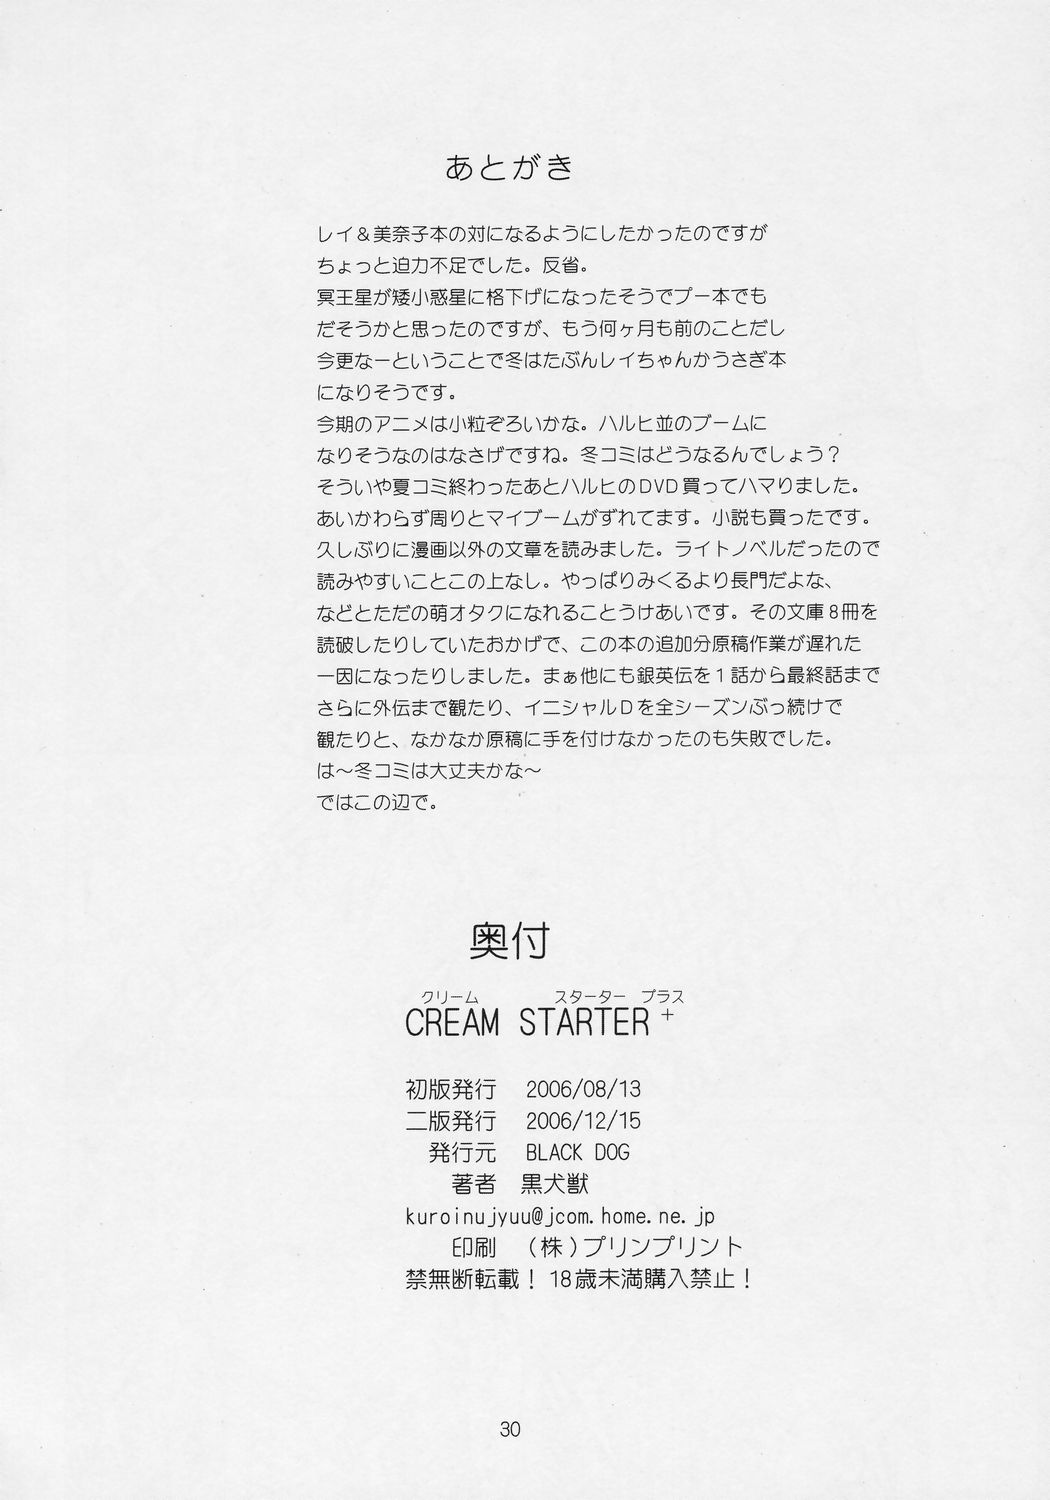 Doujinshi - Sailor Moon - Cream Starter 